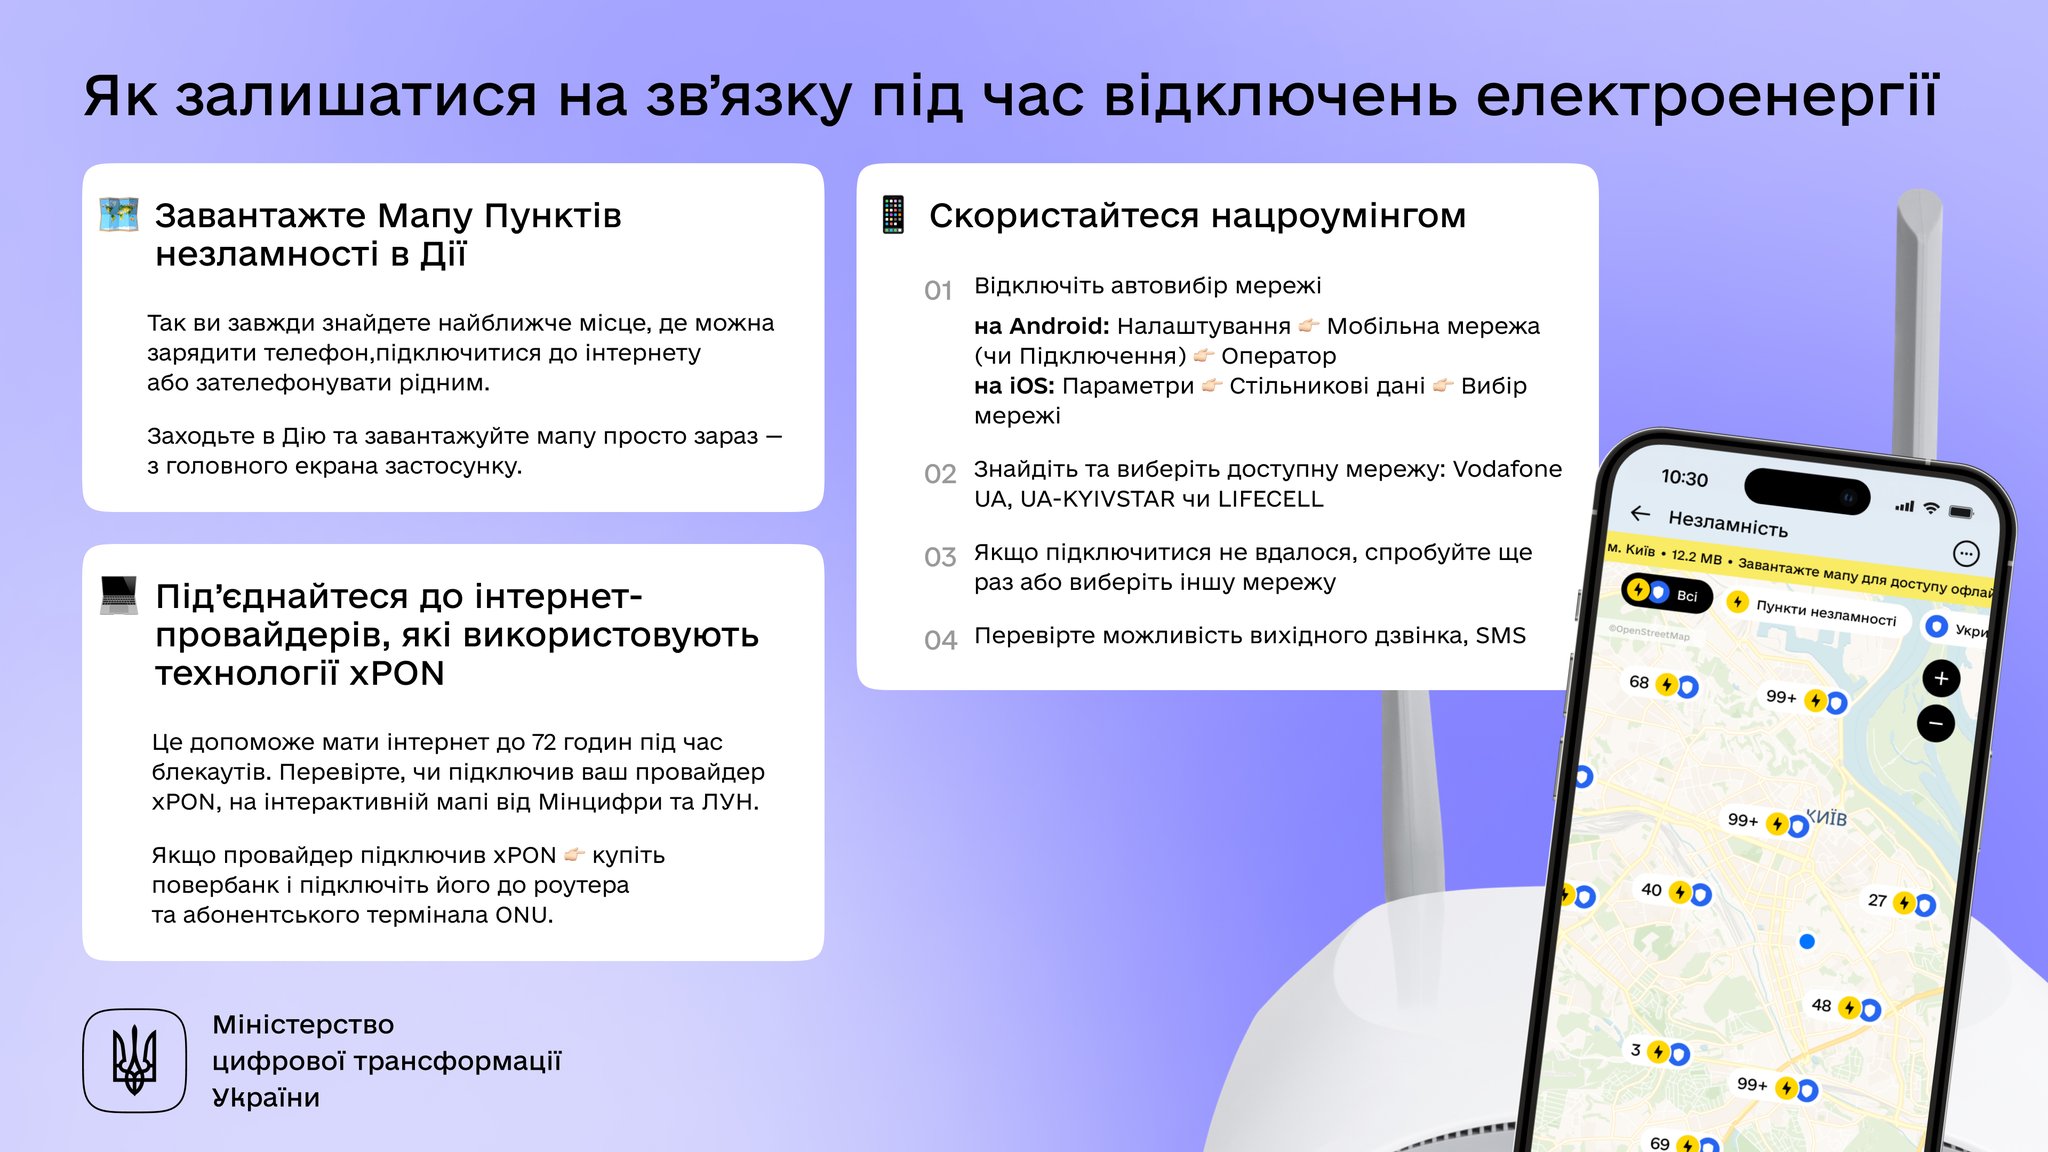 https://rai.ua/novyny/yak-zalyshatysia-na-zv%ca%bciazku-pid-chas-vidkliuchen-elektroenerhii